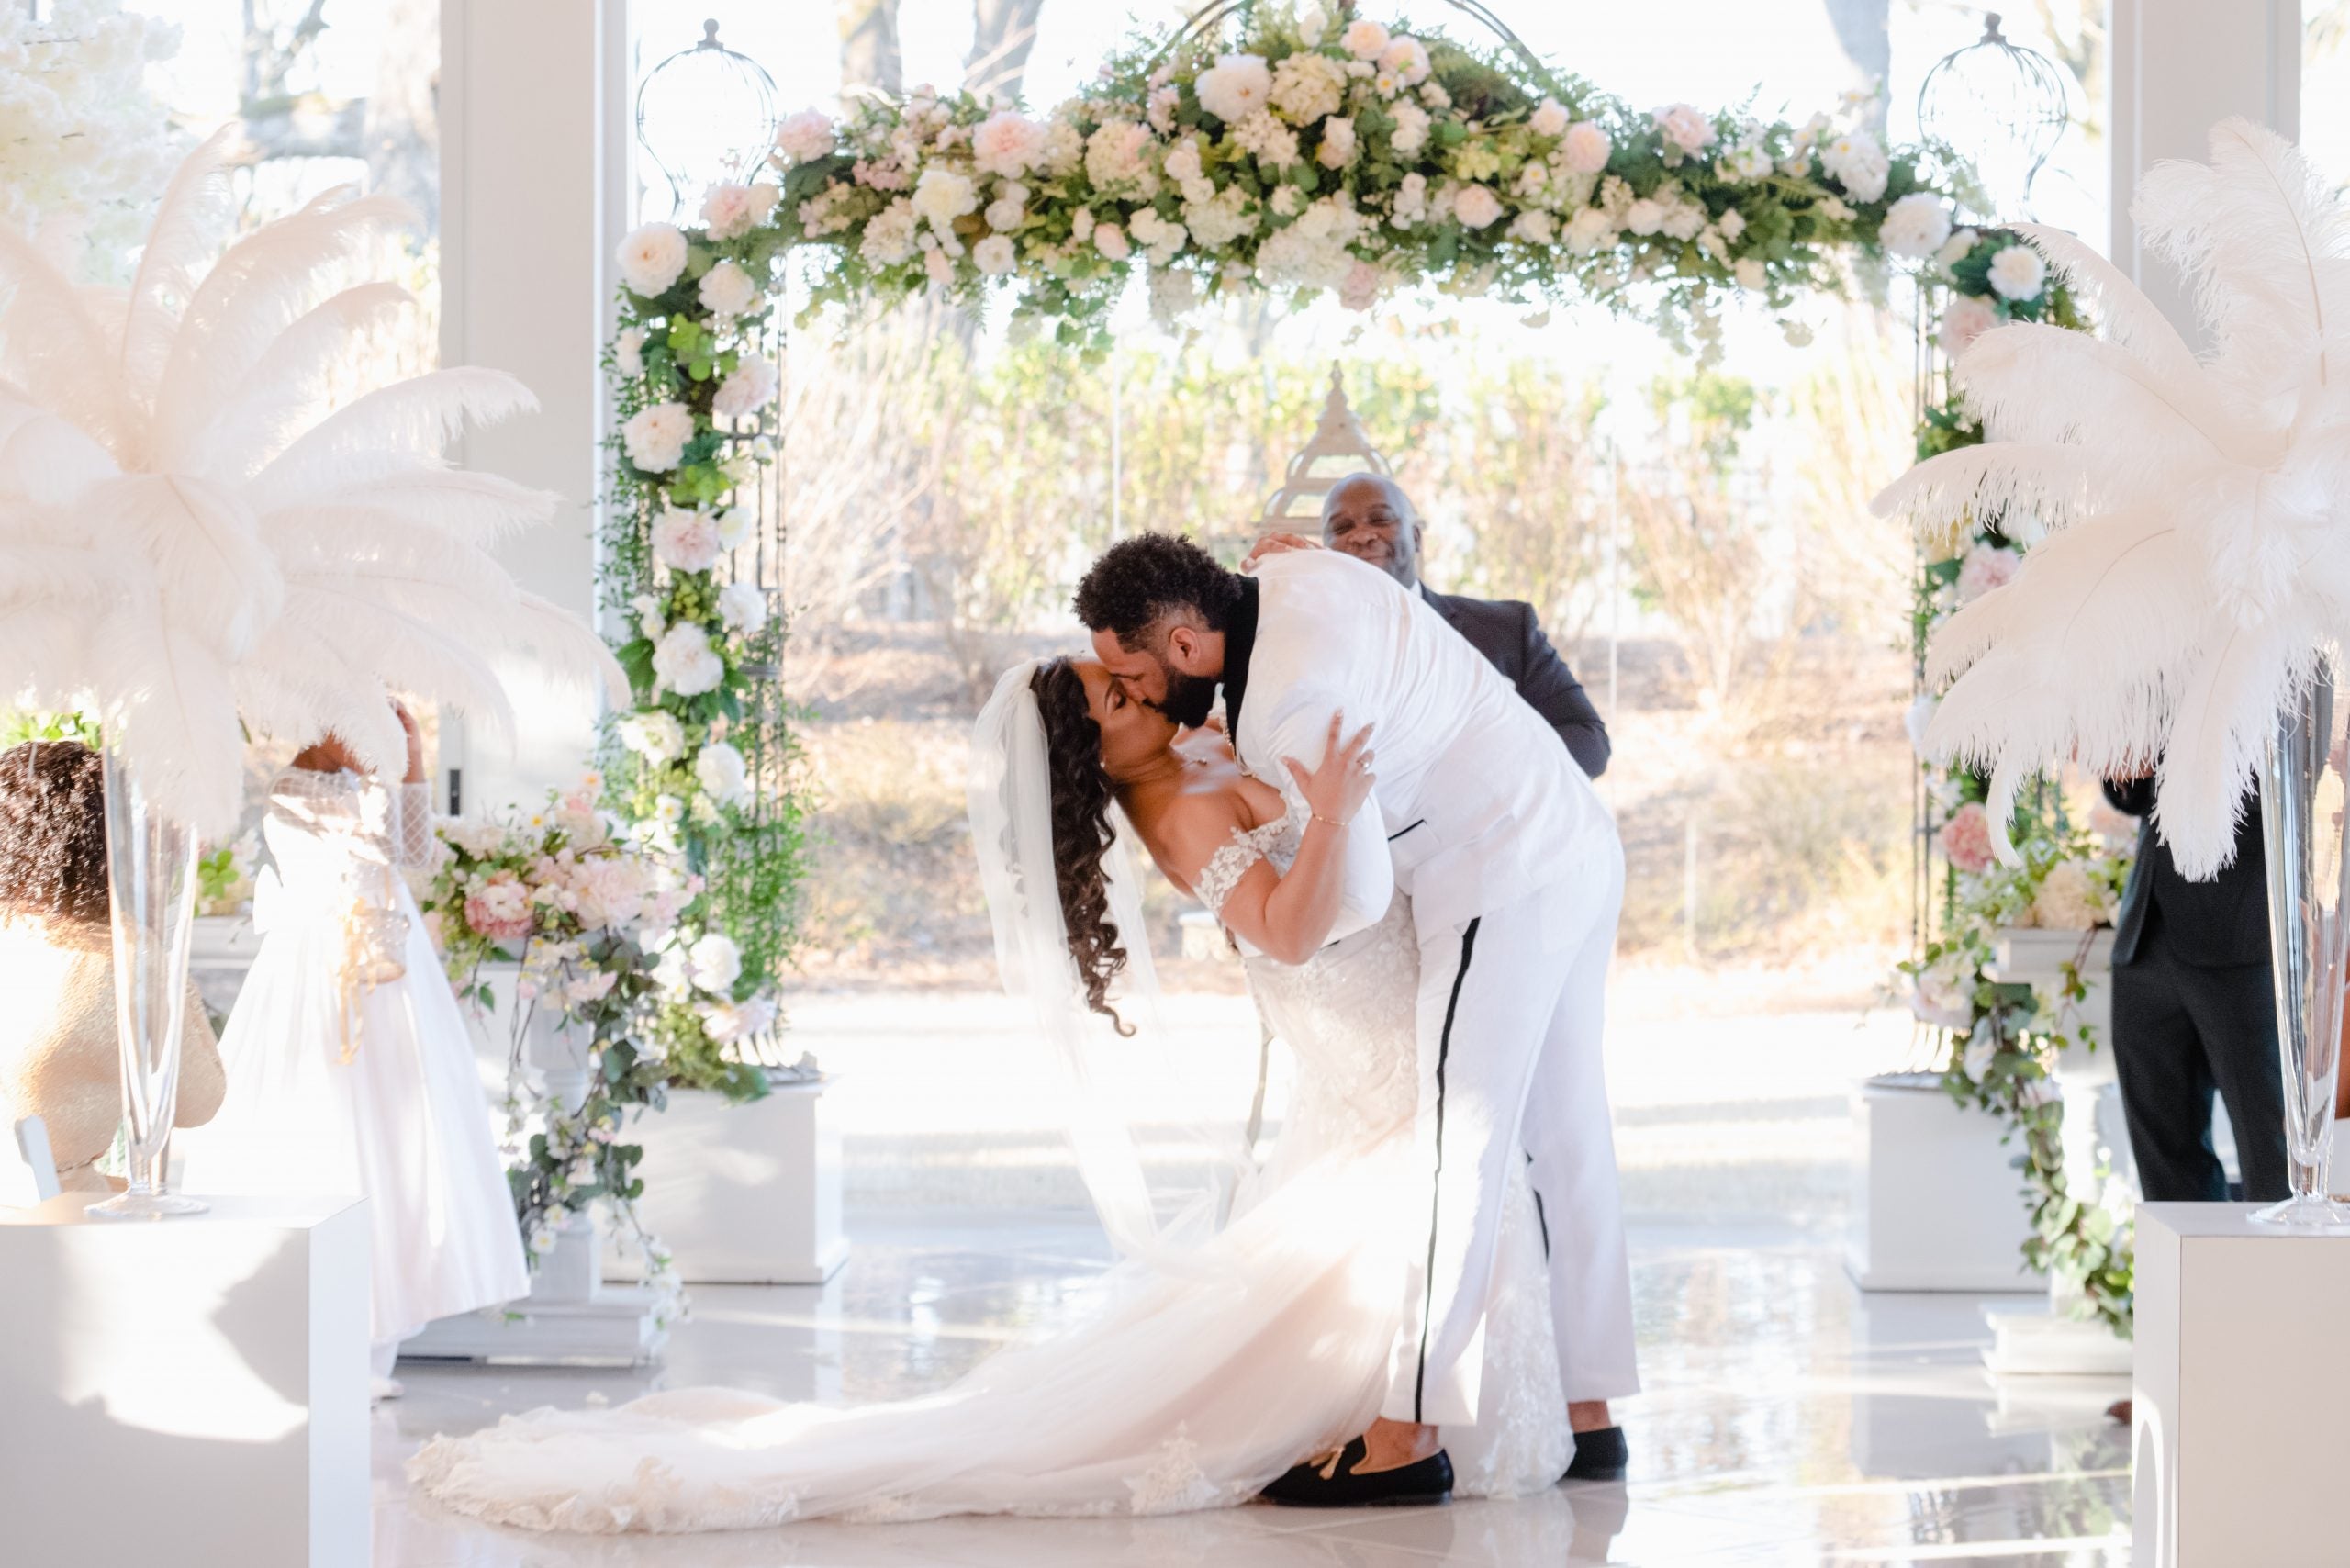 Bridal Bliss: Joscelyn And Josue's Winter Wedding In Atlanta Was Oh So Glamorous